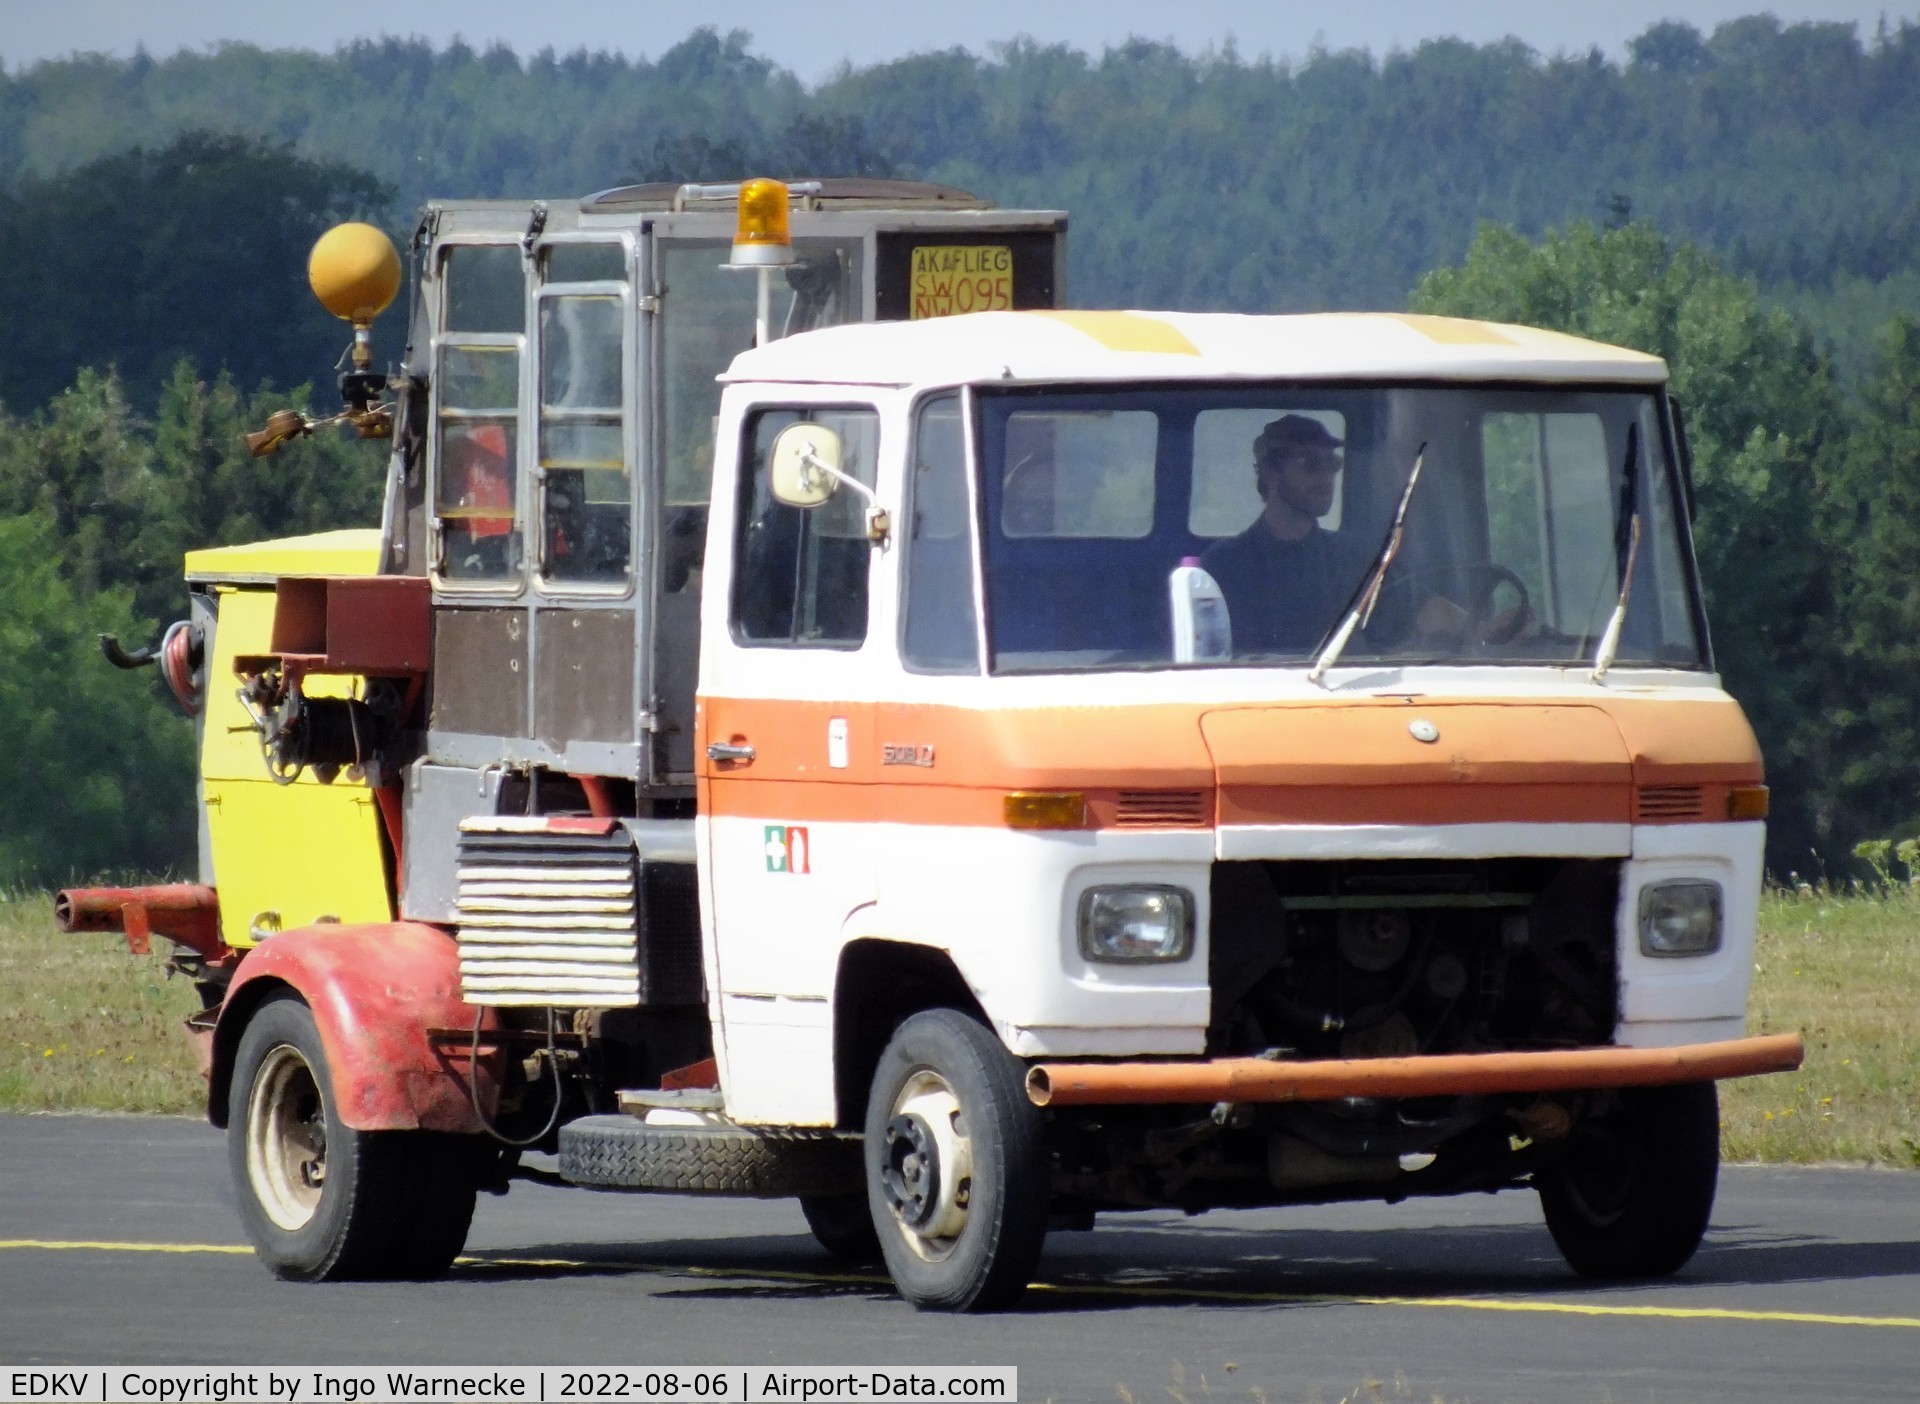 Dahlemer Binz Airport, Dahlem Germany (EDKV) - winch-truck at Dahlemer Binz airfield